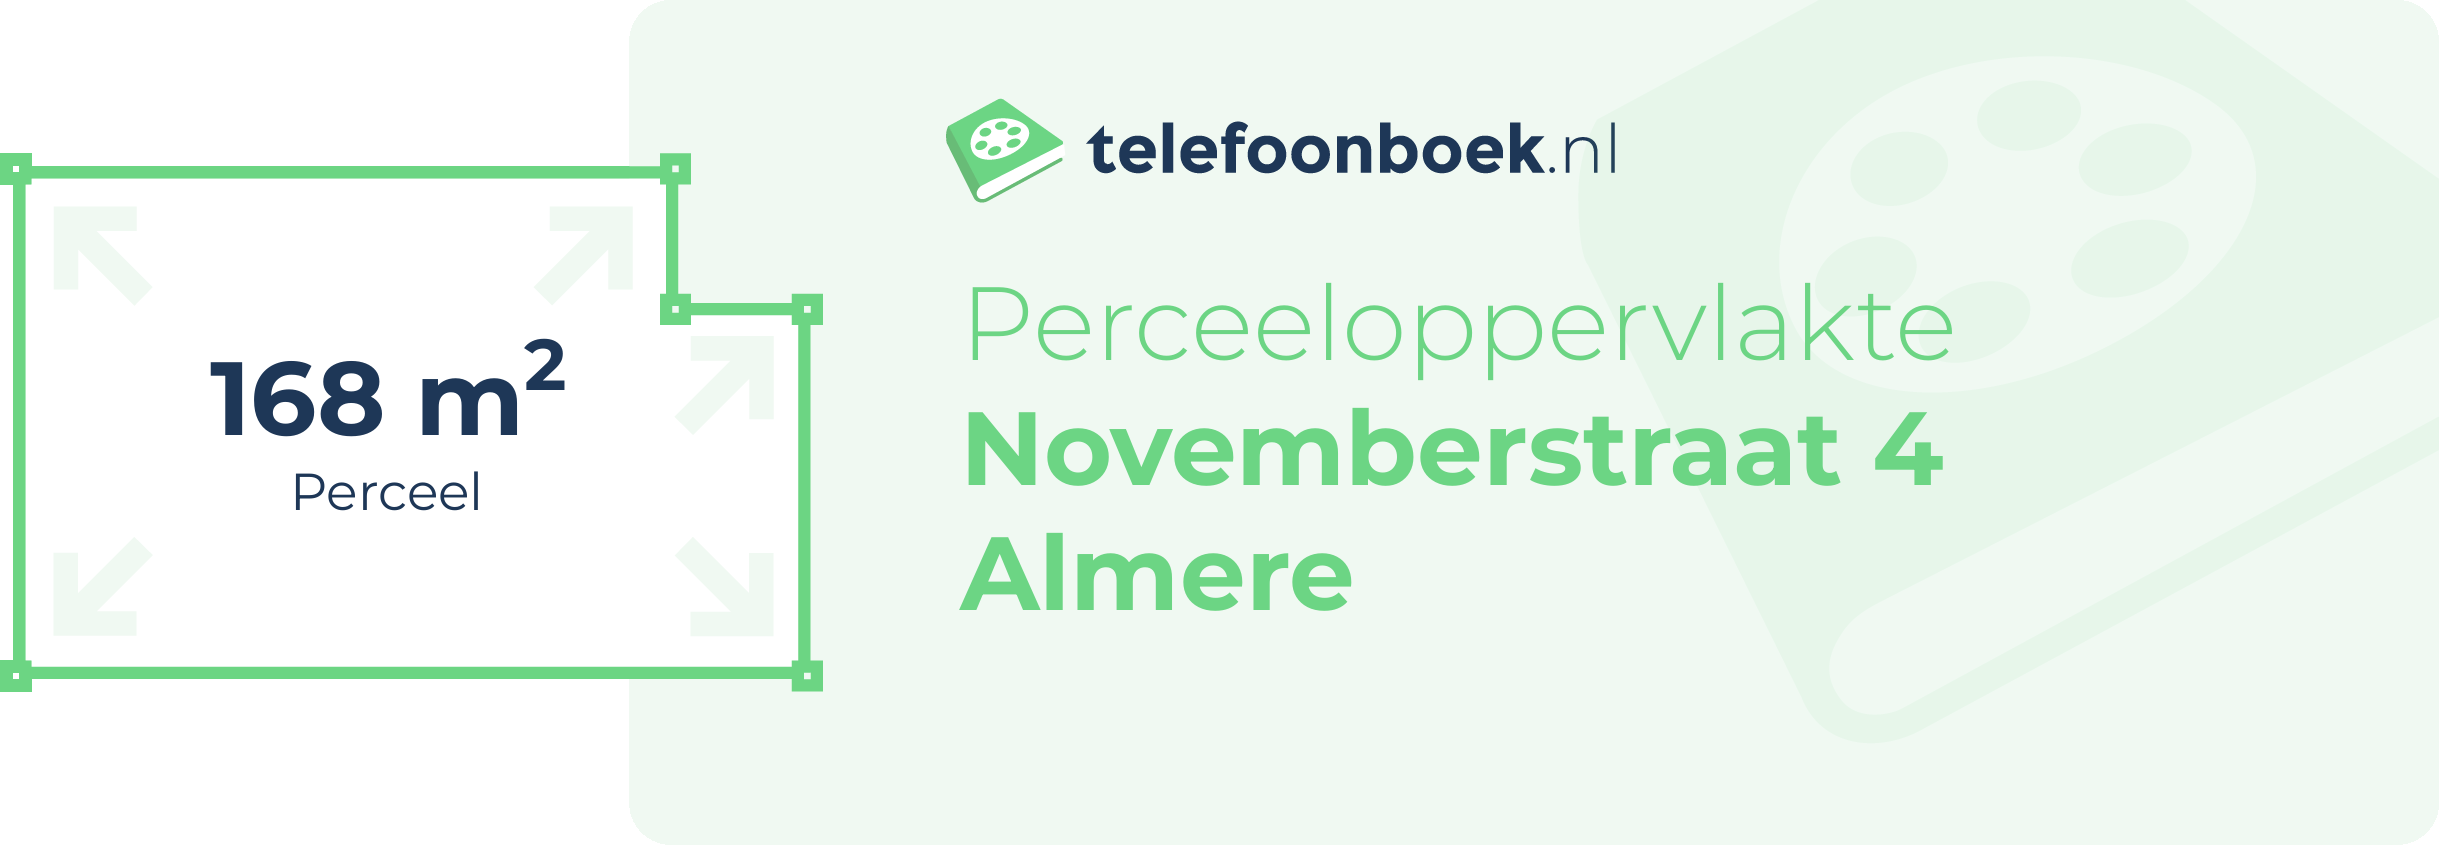 Perceeloppervlakte Novemberstraat 4 Almere